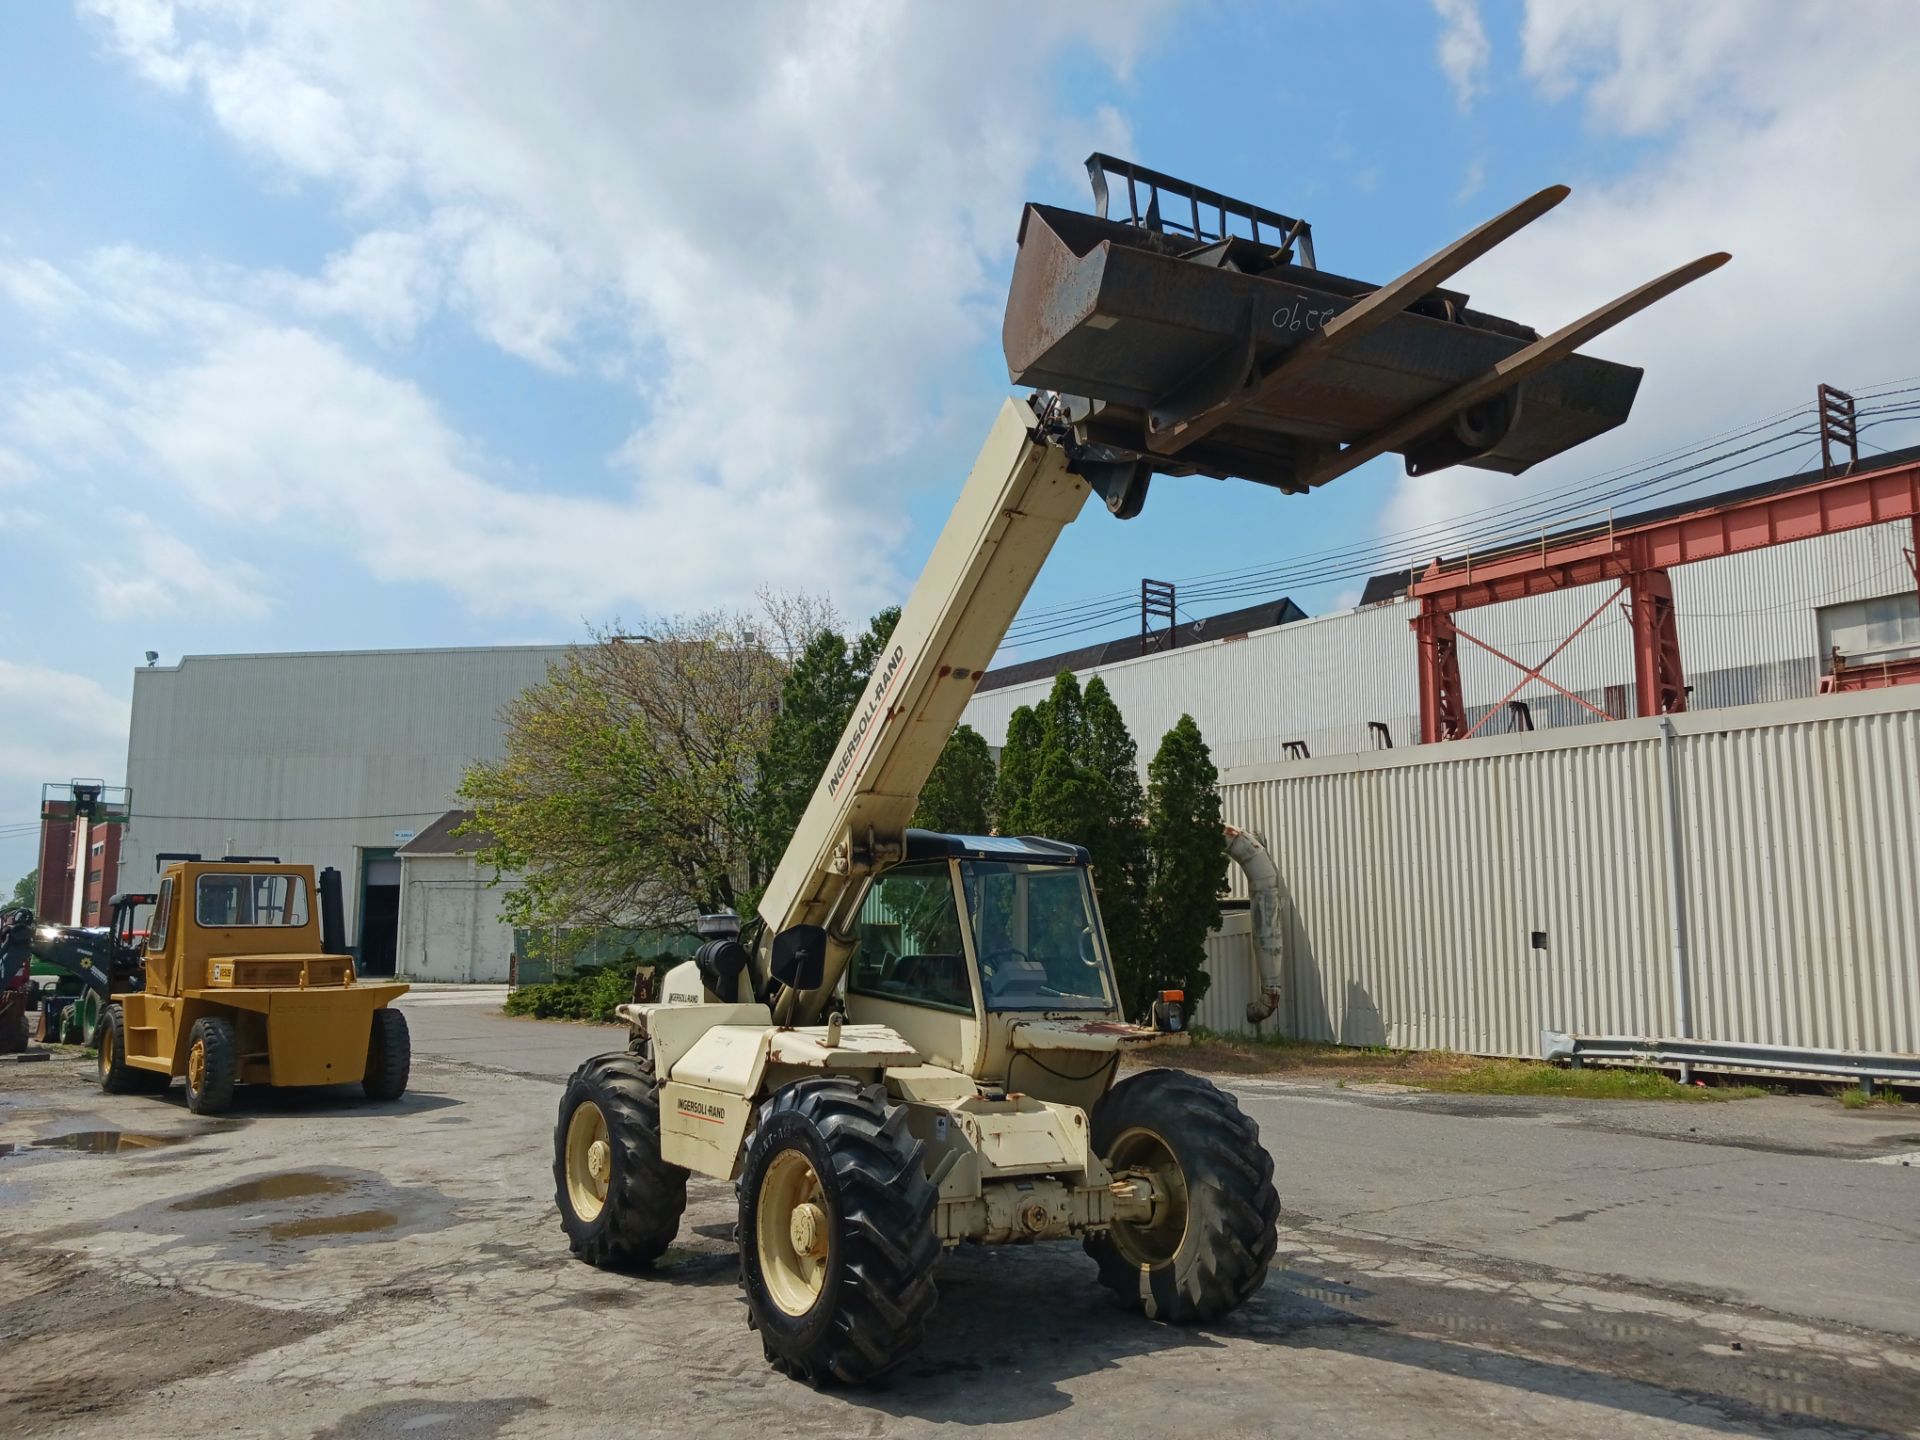 Ingersoll Rand VR524 5,000 lb Telescopic Forklift - Lester, PA - Image 6 of 17